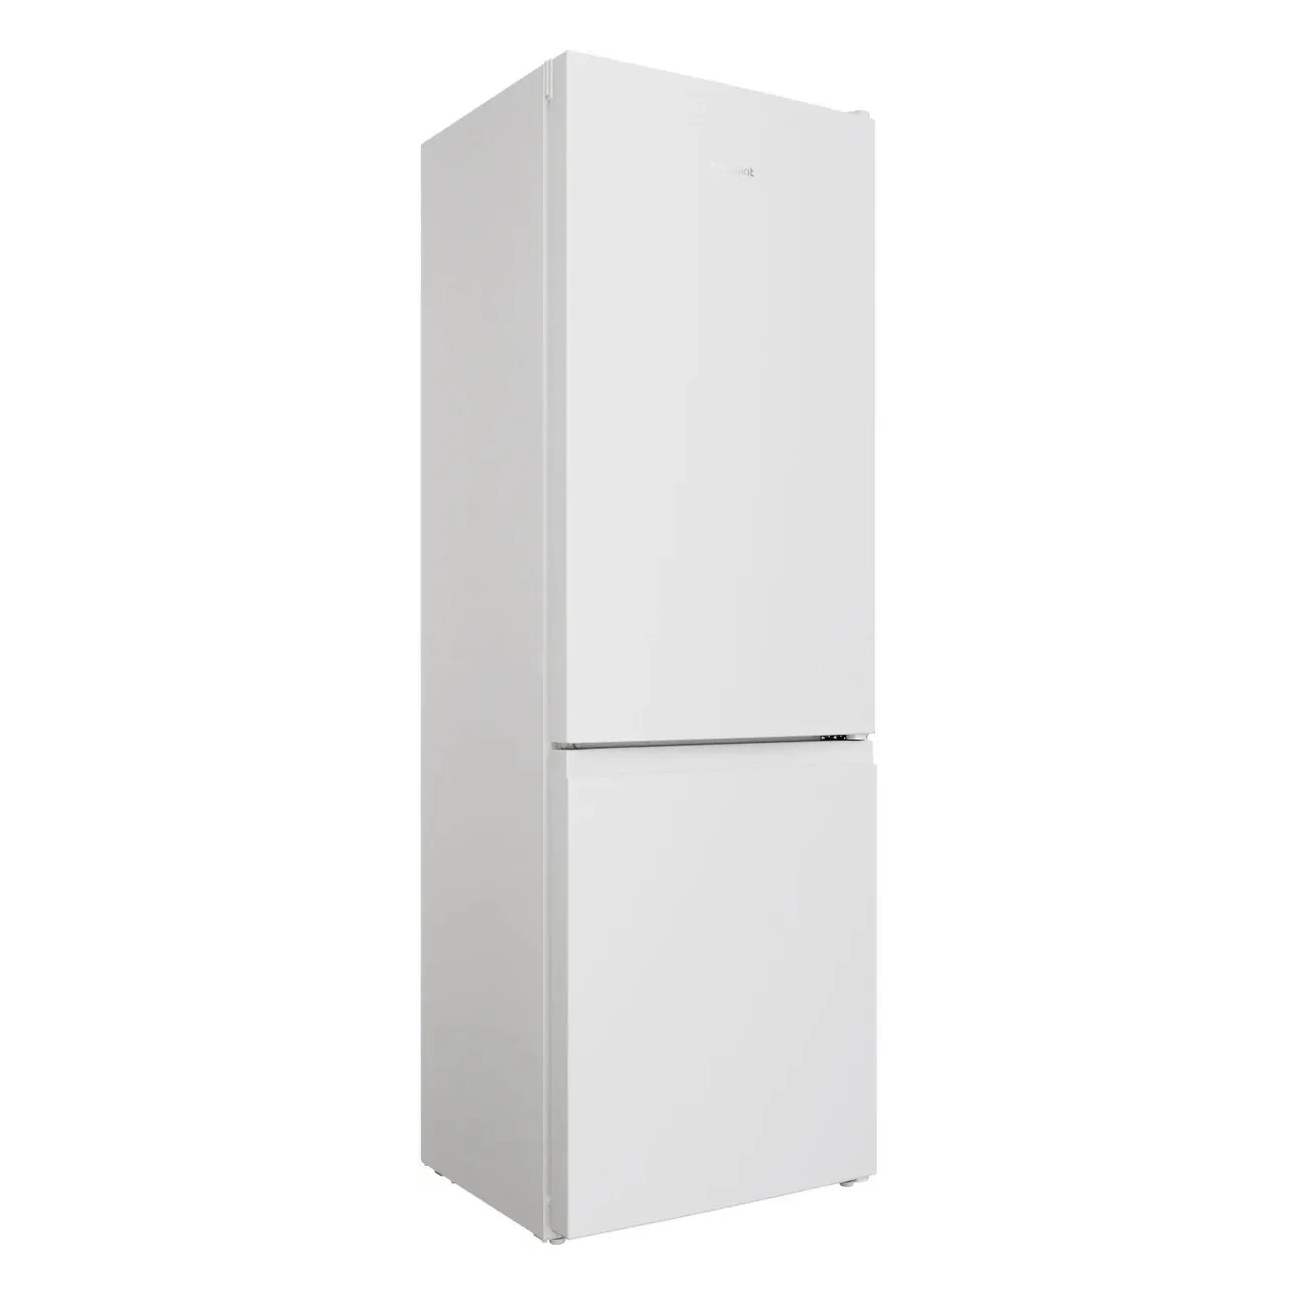 Холодильник HotPoint HT 4180 W белый, серебристый двухкамерный холодильник hotpoint ht 4180 m мраморный